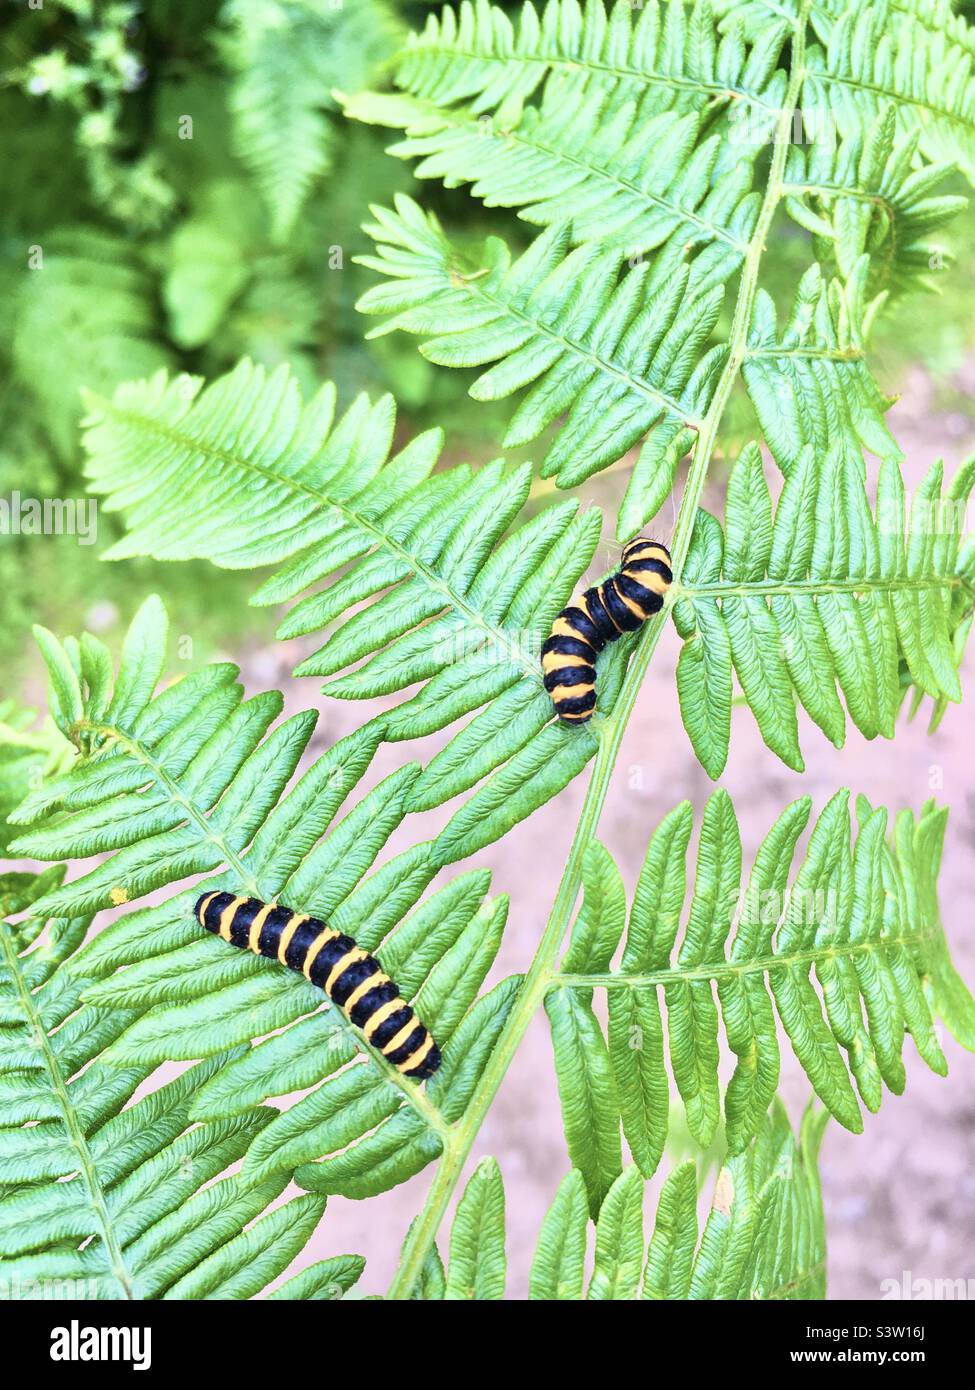 Caterpillar on a fern leaf Stock Photo